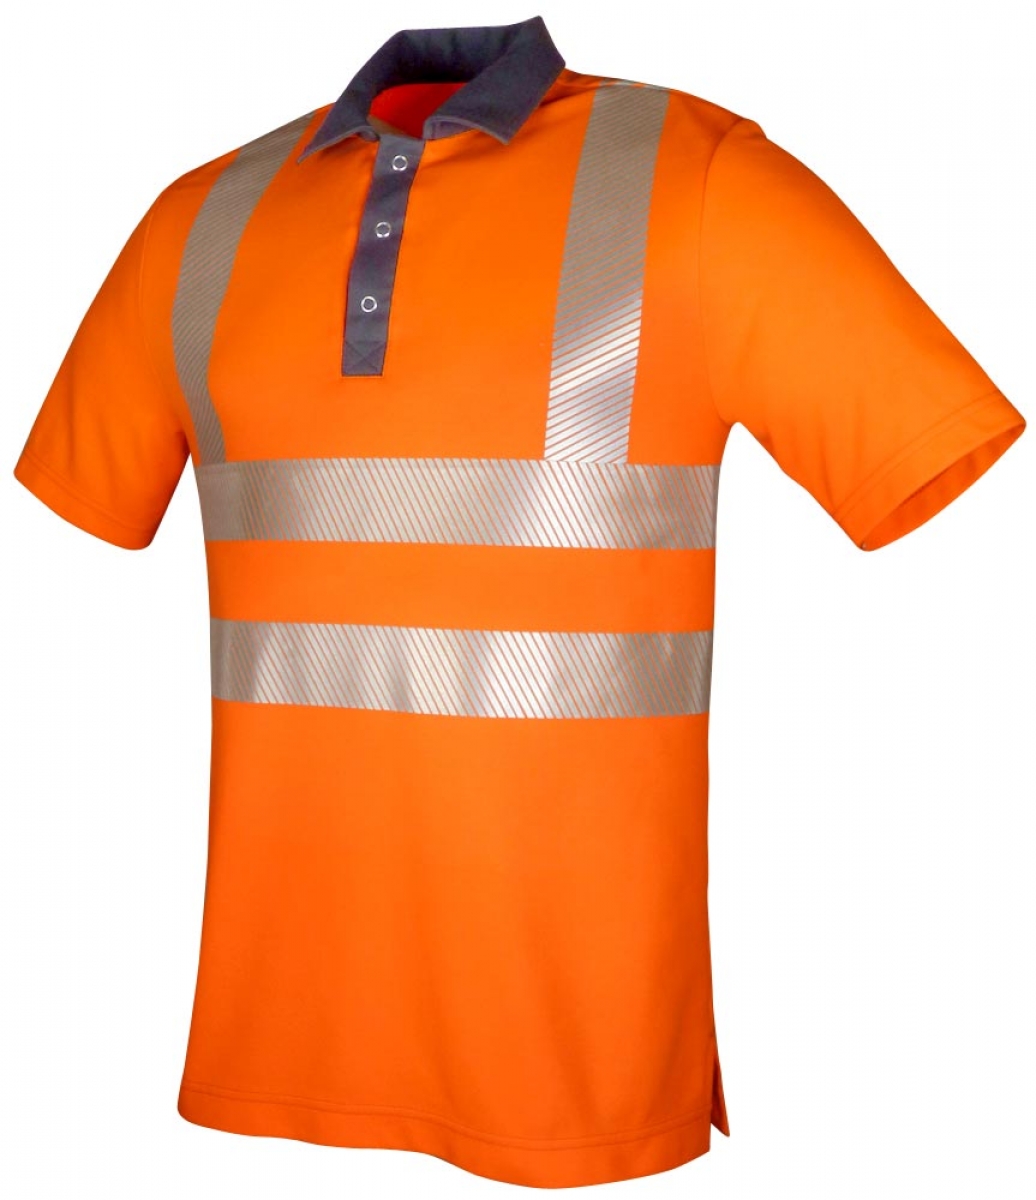 TEAMDRESS-Warnschutz, PSA, Warnschutz-Poloshirt, Kl. 2, warnorange/grau